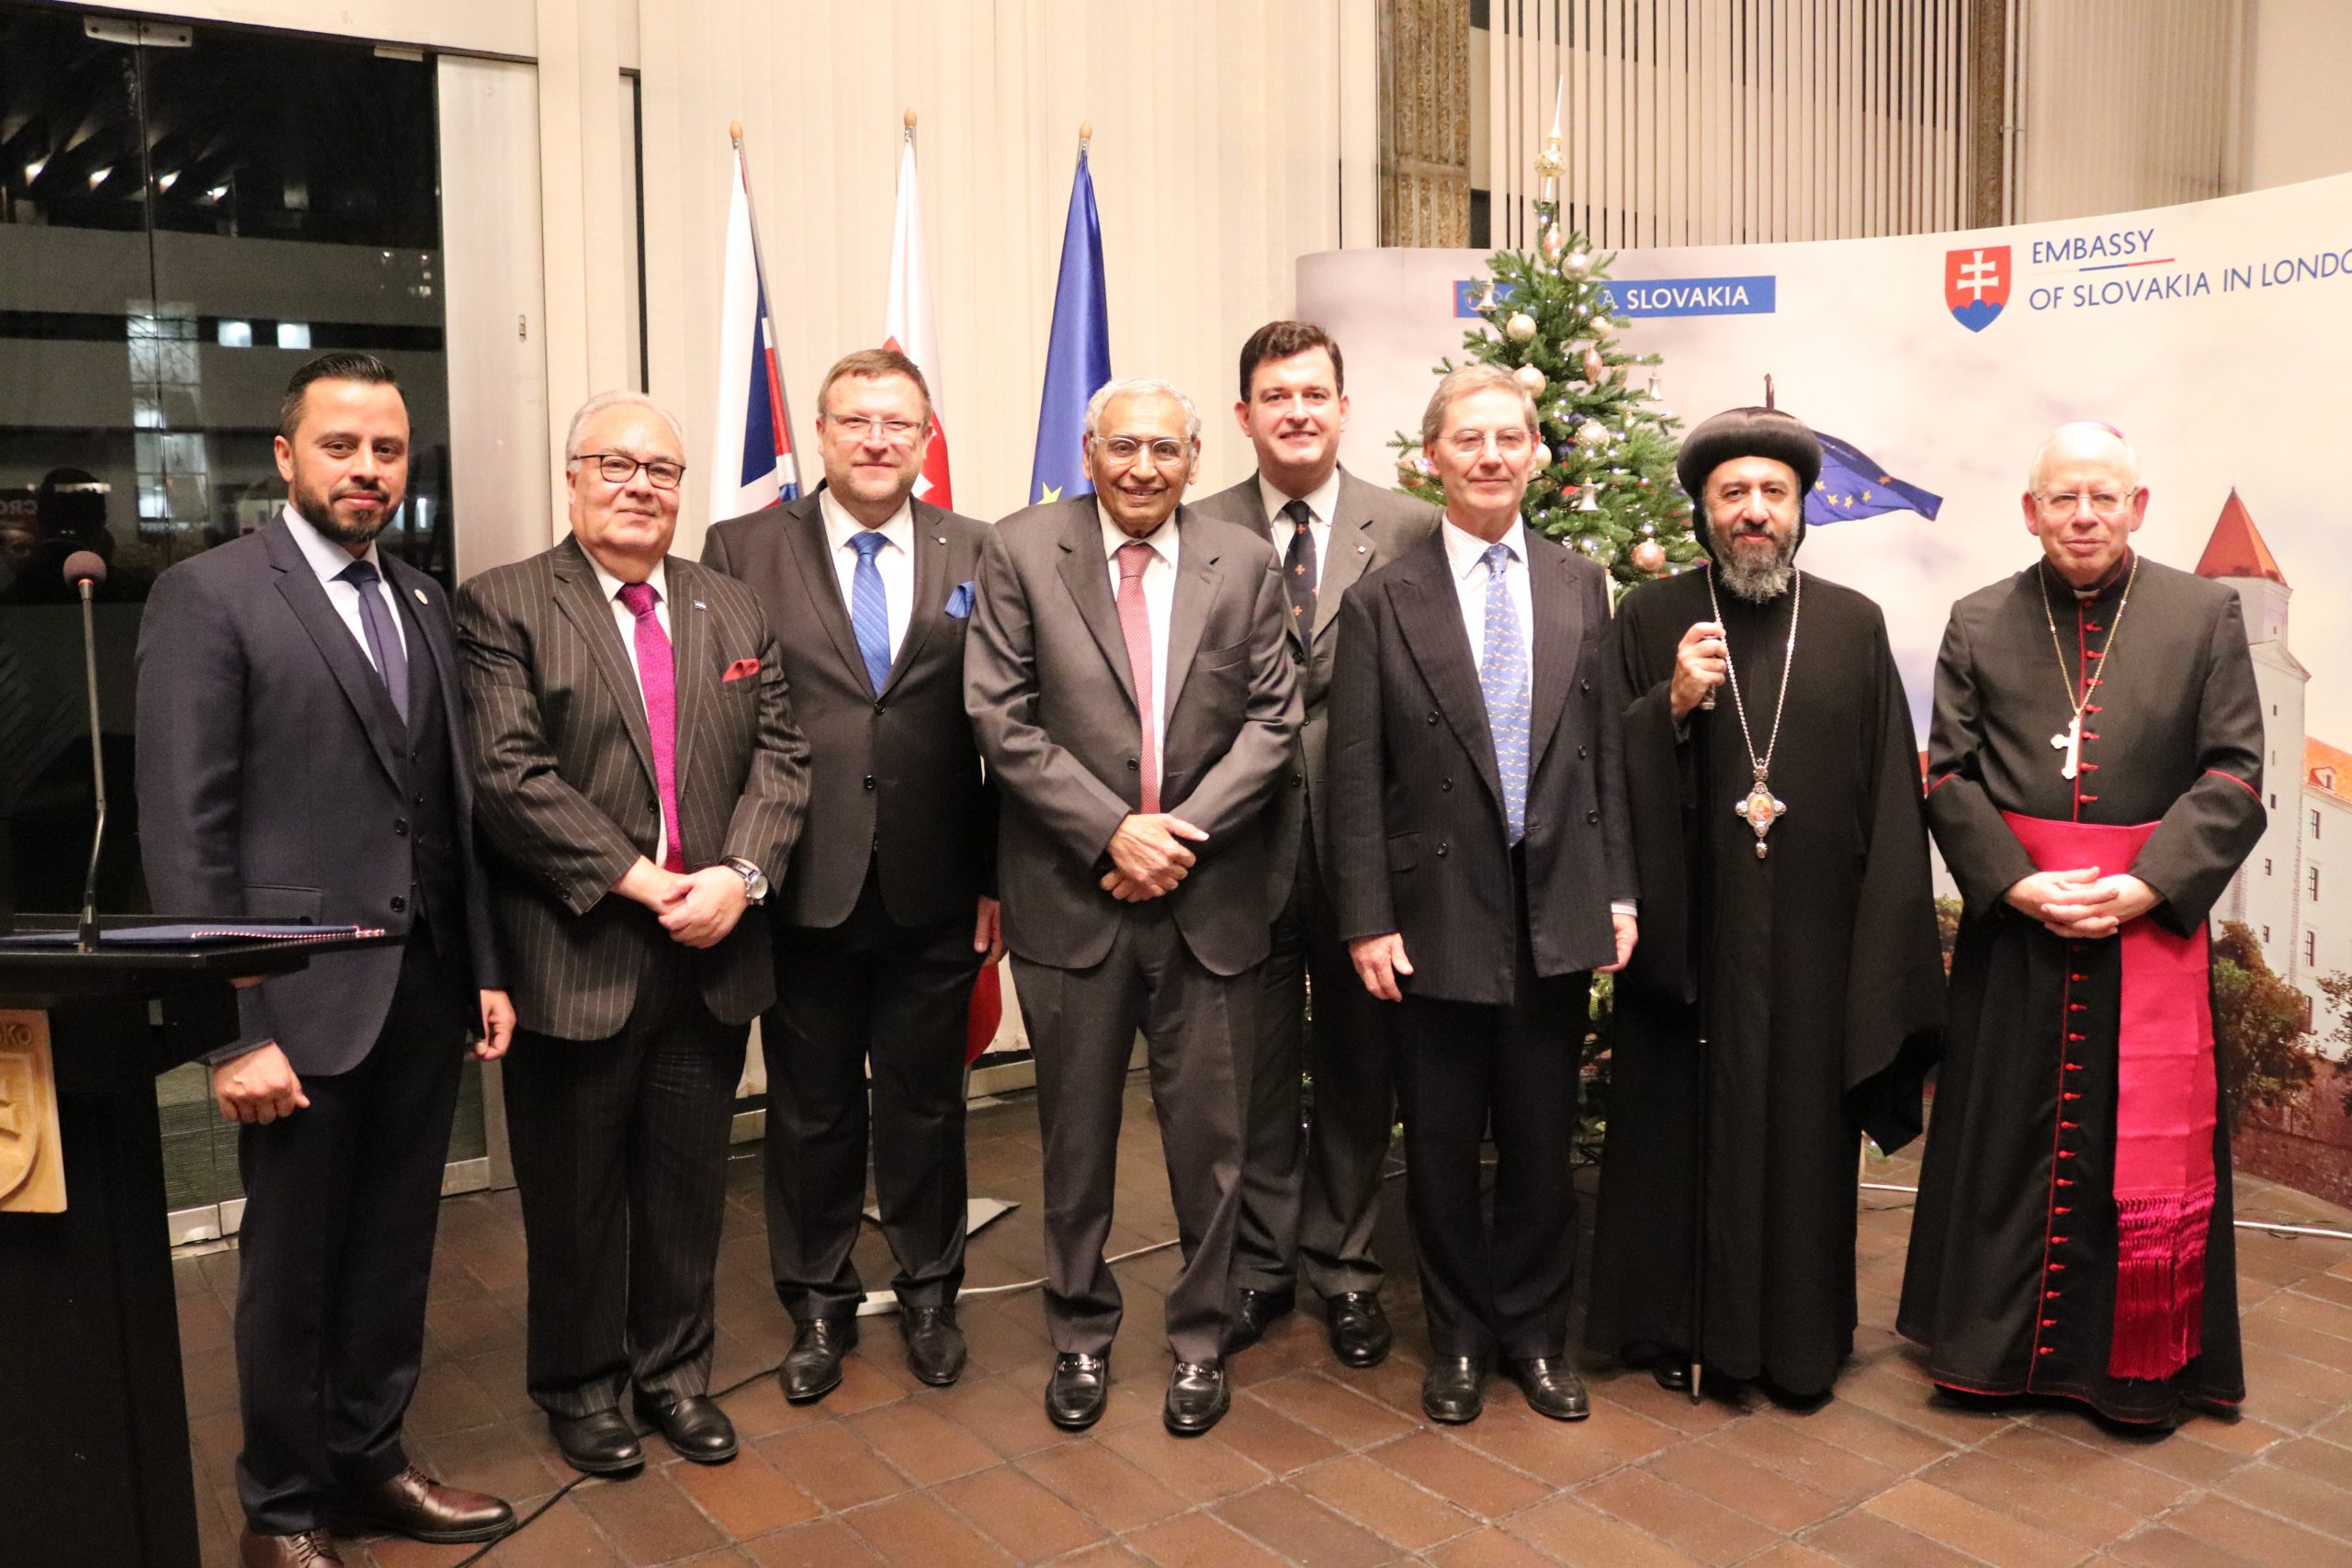 Constantinian Order &  Slovak Embassy celebrate faith communities & interfaith dialogue in Britain & Ireland in presence of faith leaders, UK minister, ambassador